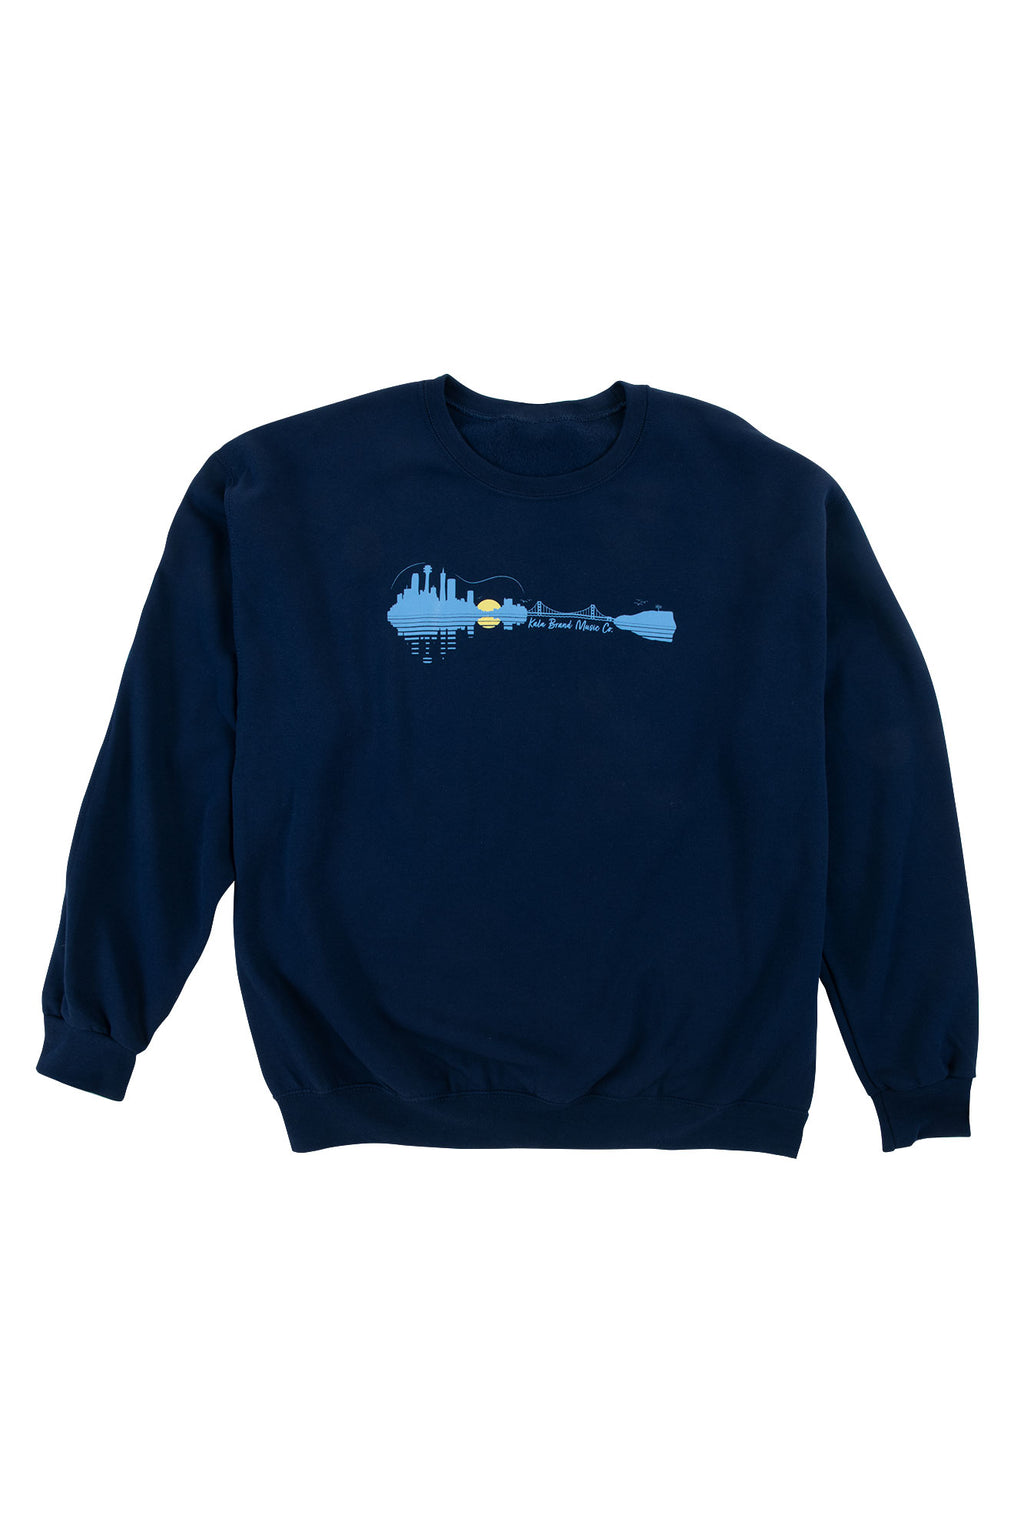 Kala Metropolitan Skyline Crewneck Sweatshirt